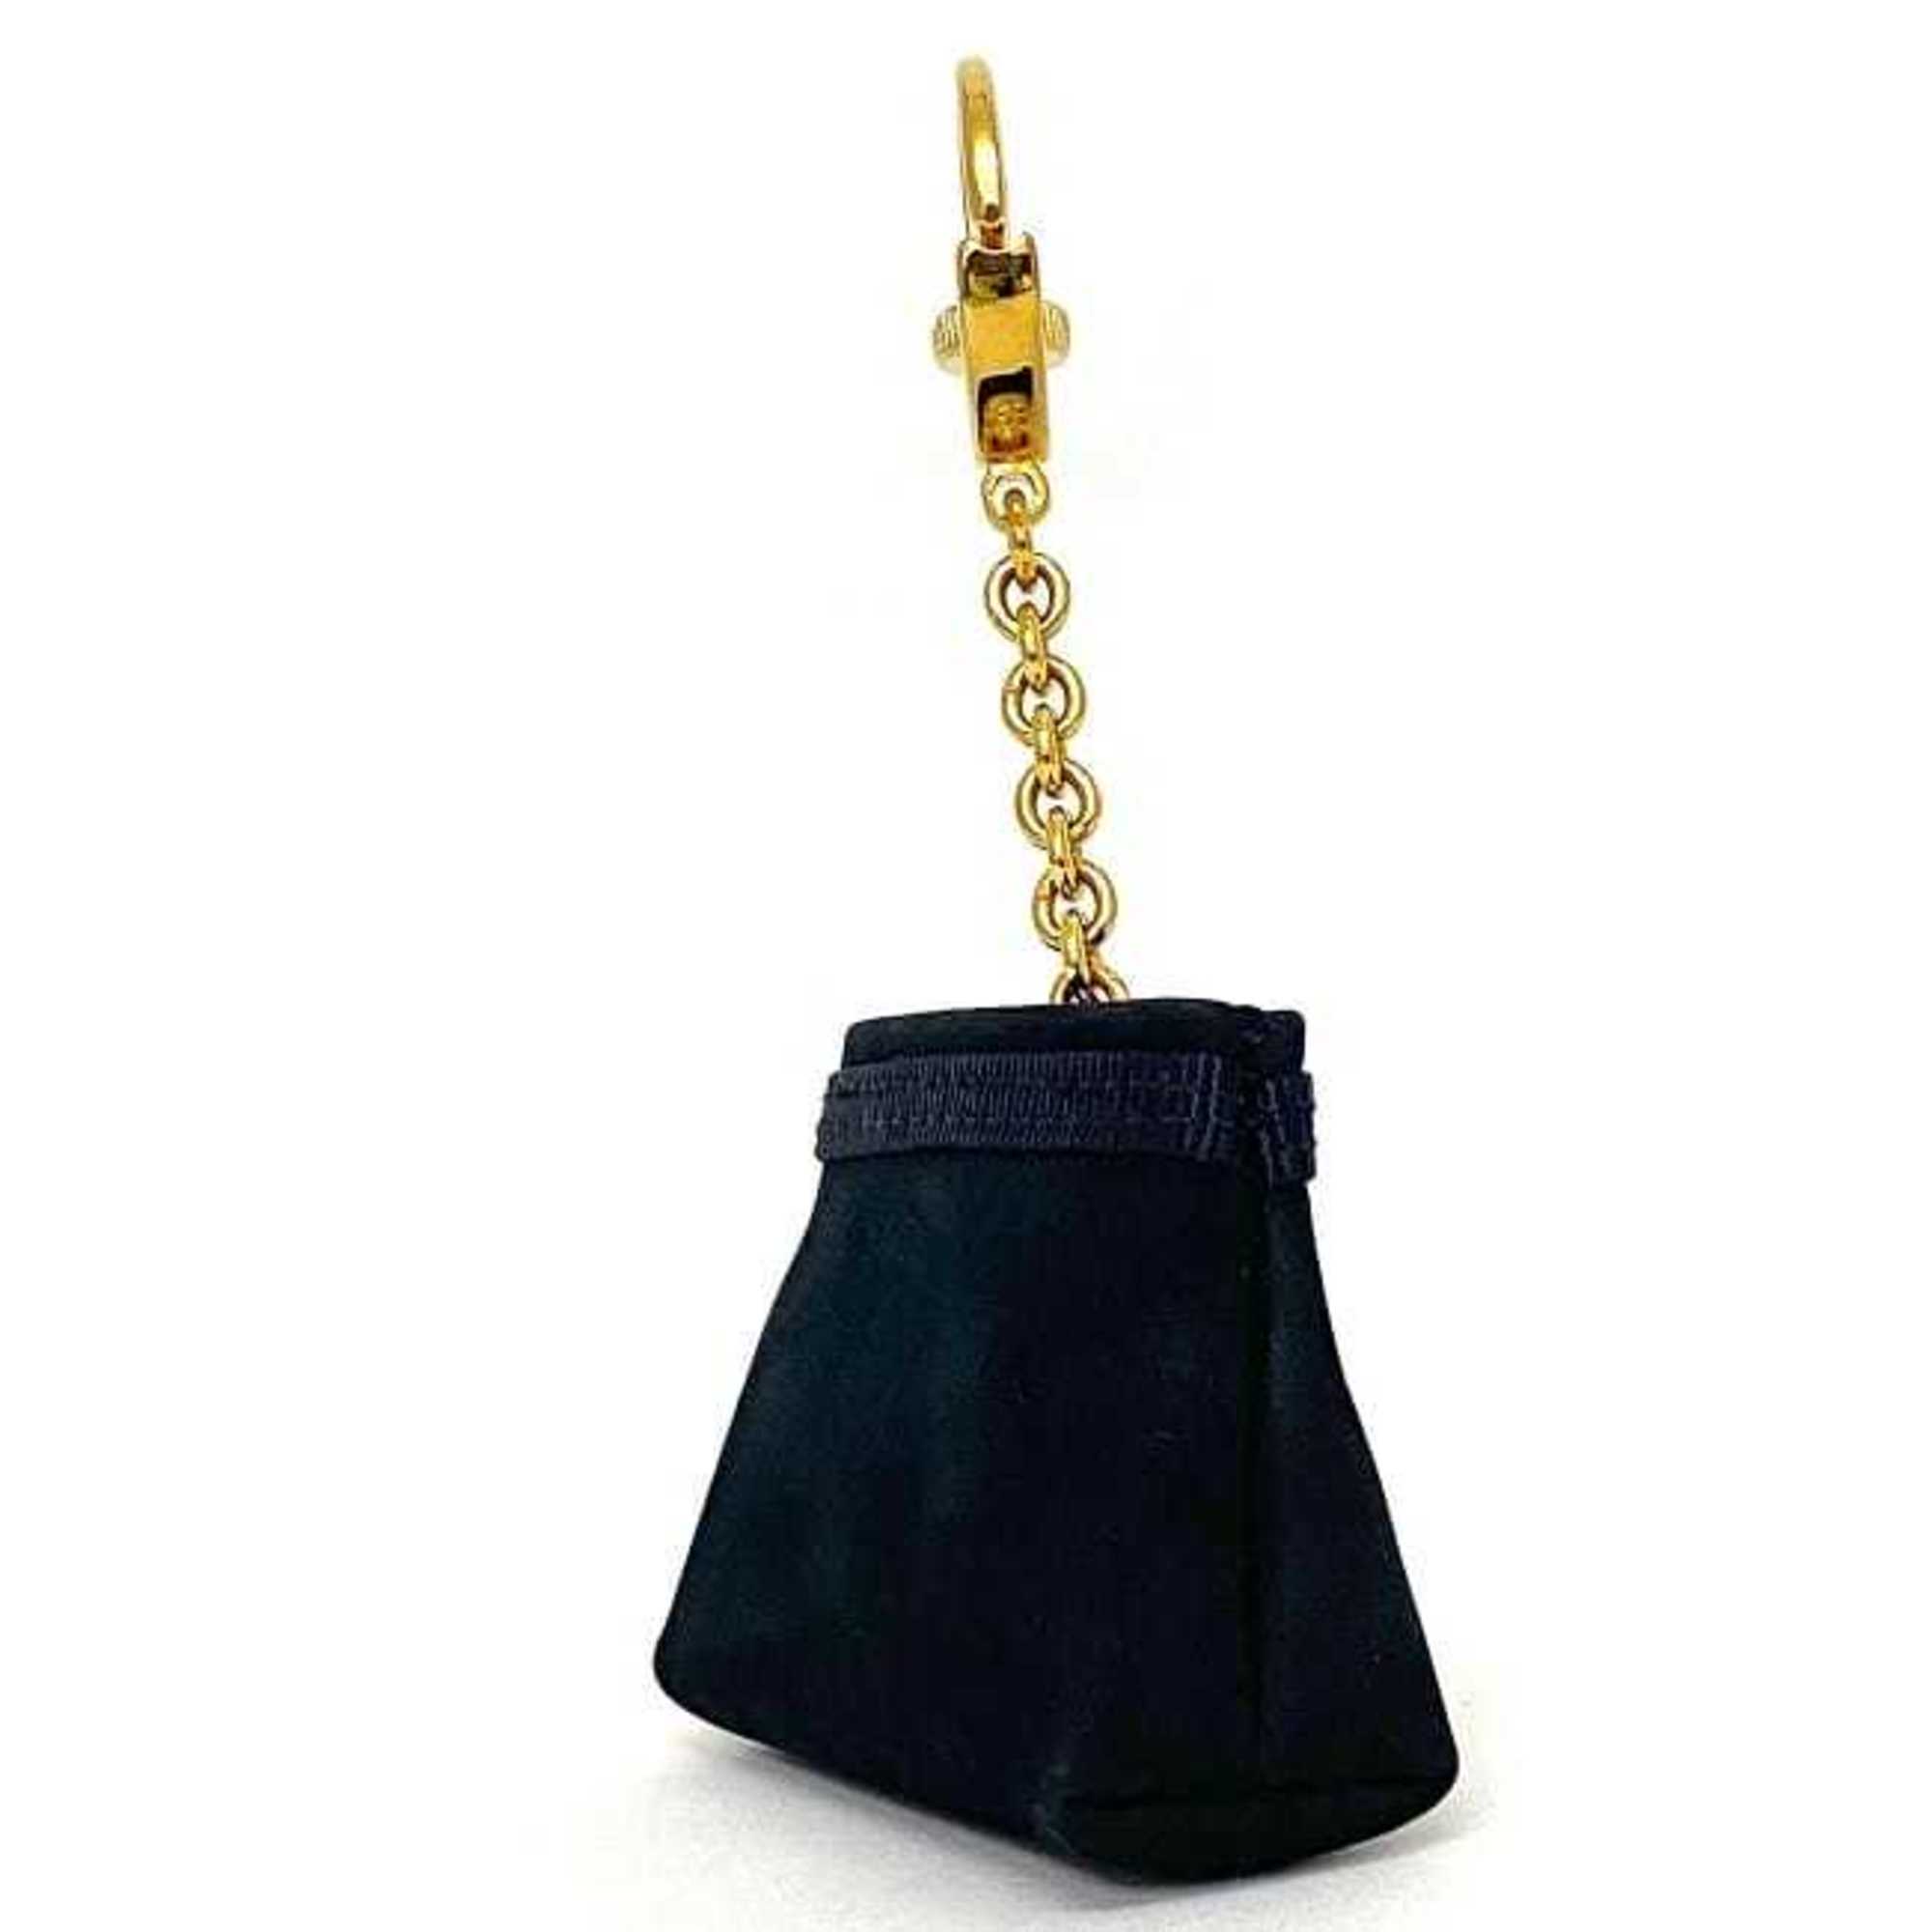 Salvatore Ferragamo bag charm navy gold vara 22 5618 leather suede GP motif key holder pouch chain ladies